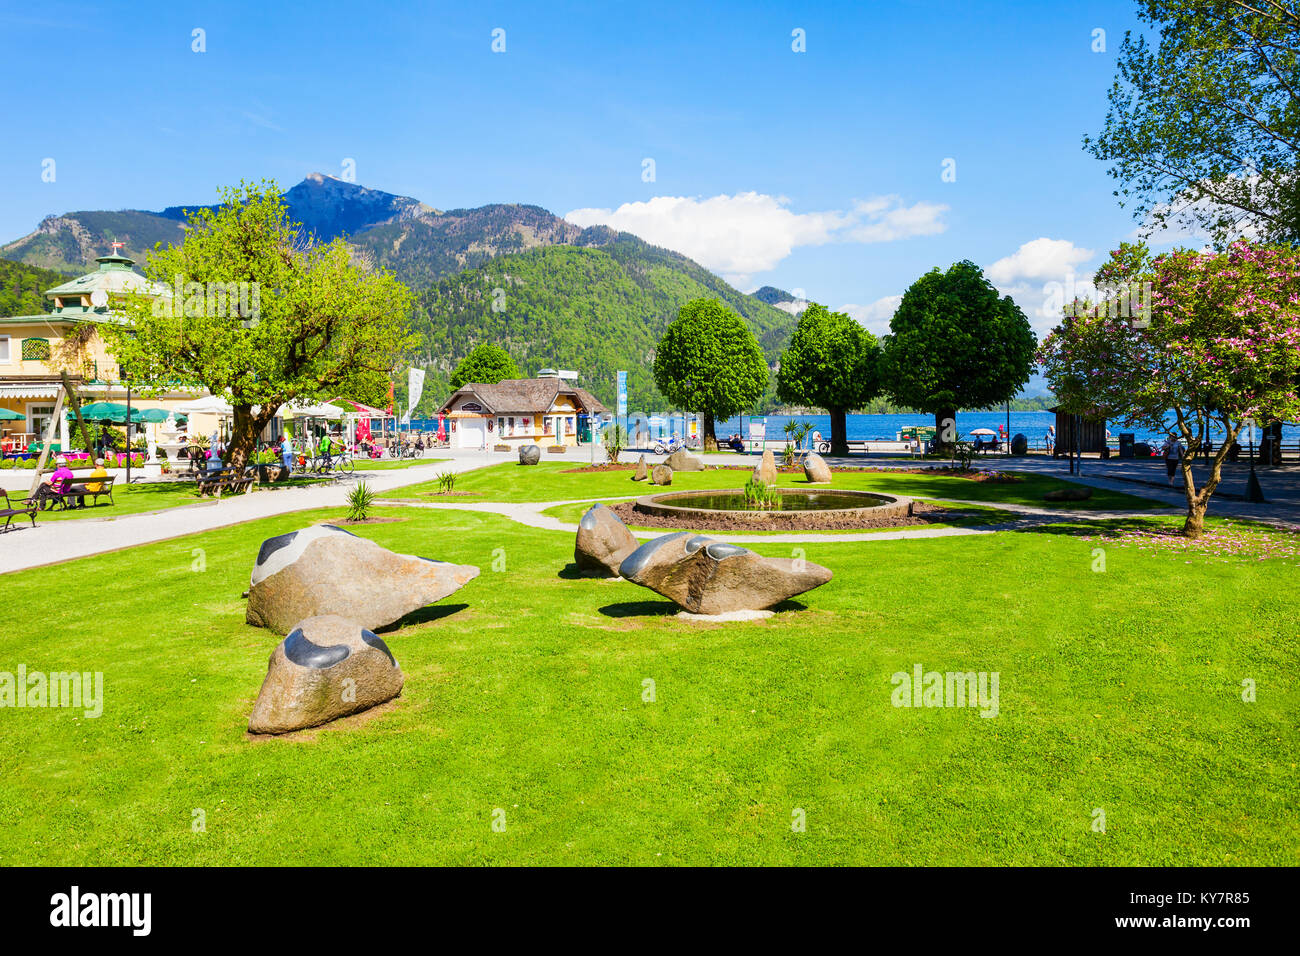 ST. GILGEN, AUSTRIA - MAY 17, 2017: Public park in St Gilgen village, Salzkammergut region of Austria. St Gilgen located at Wolfgangsee Lake. Stock Photo